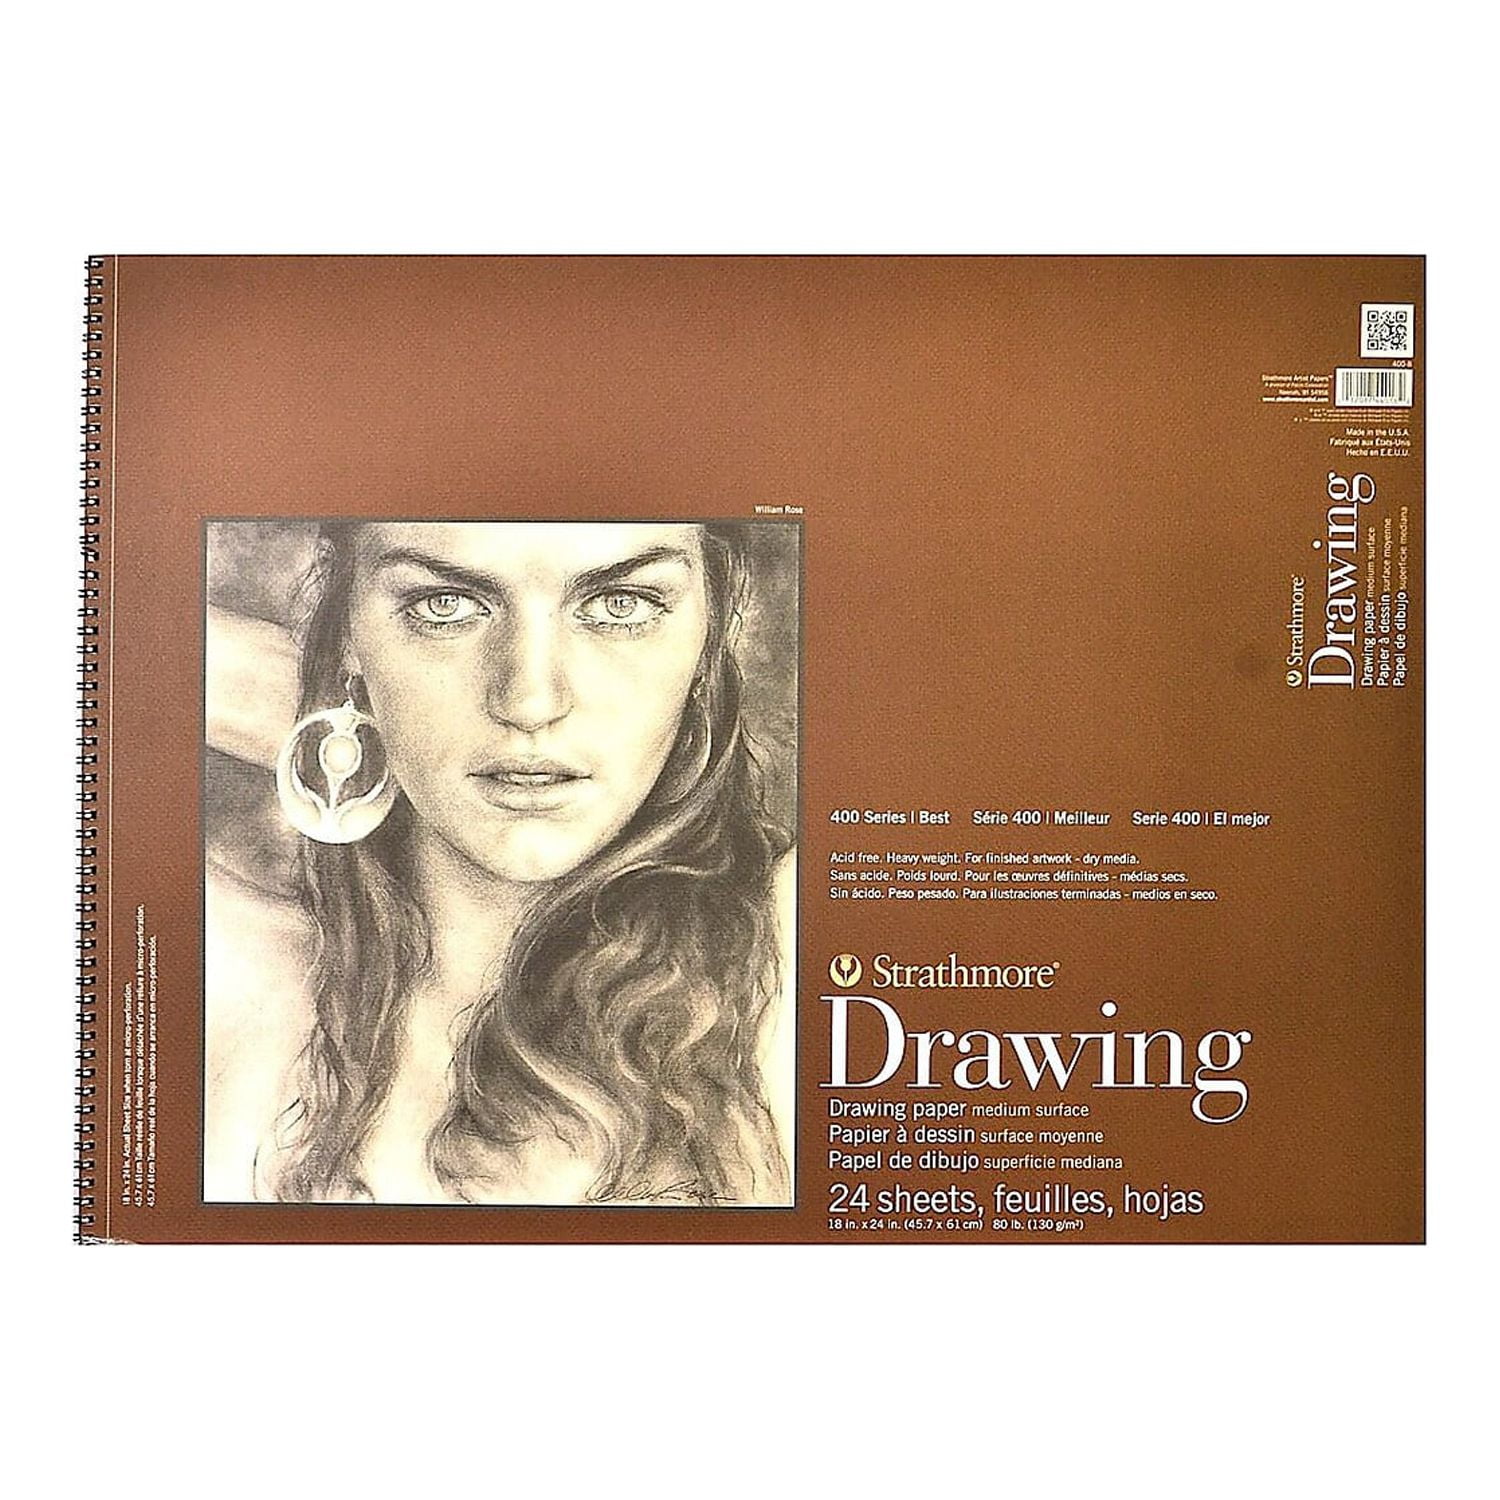 Strathmore Drawing Medium Paper Pad 4x6 24 Sheets